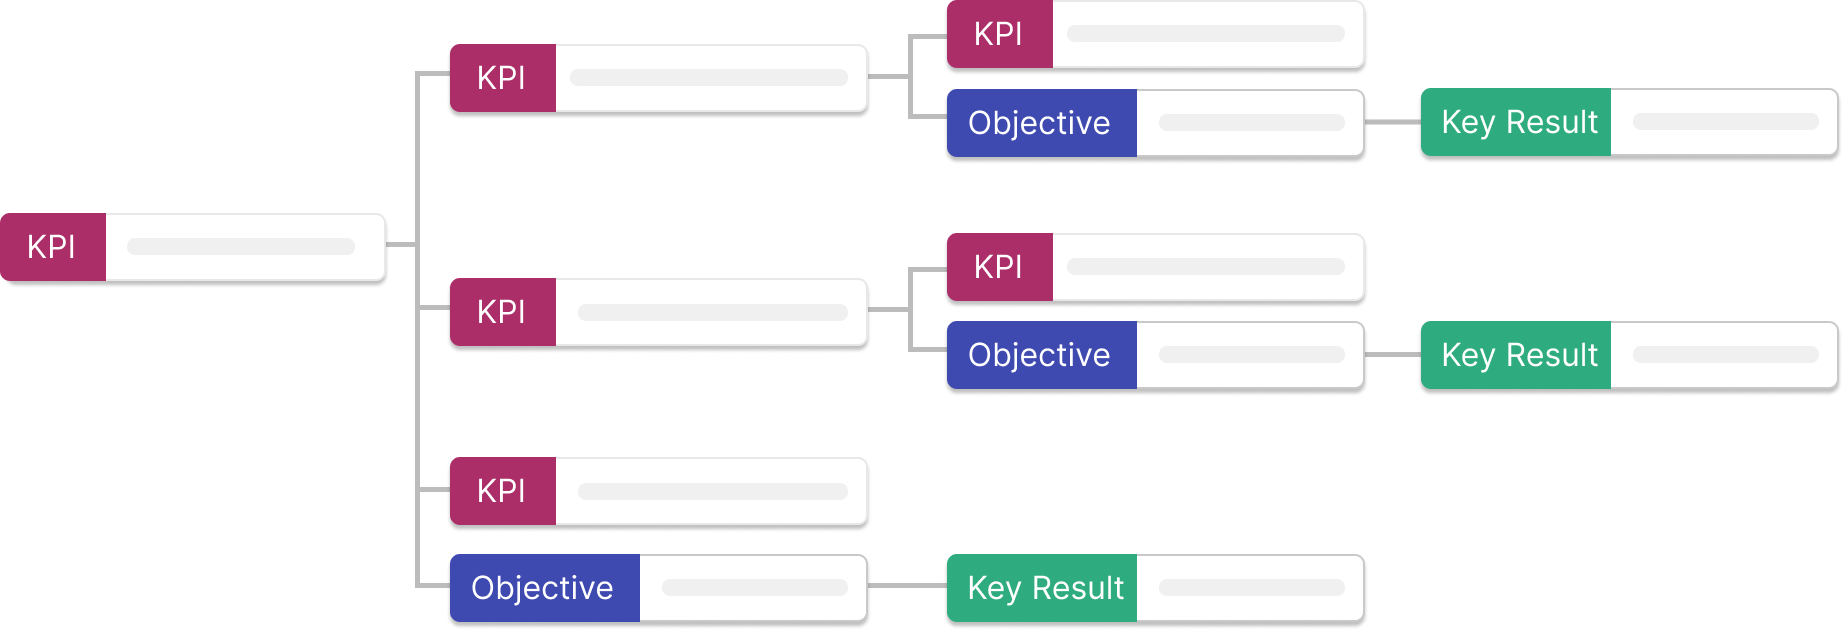 OKR KPI Tree